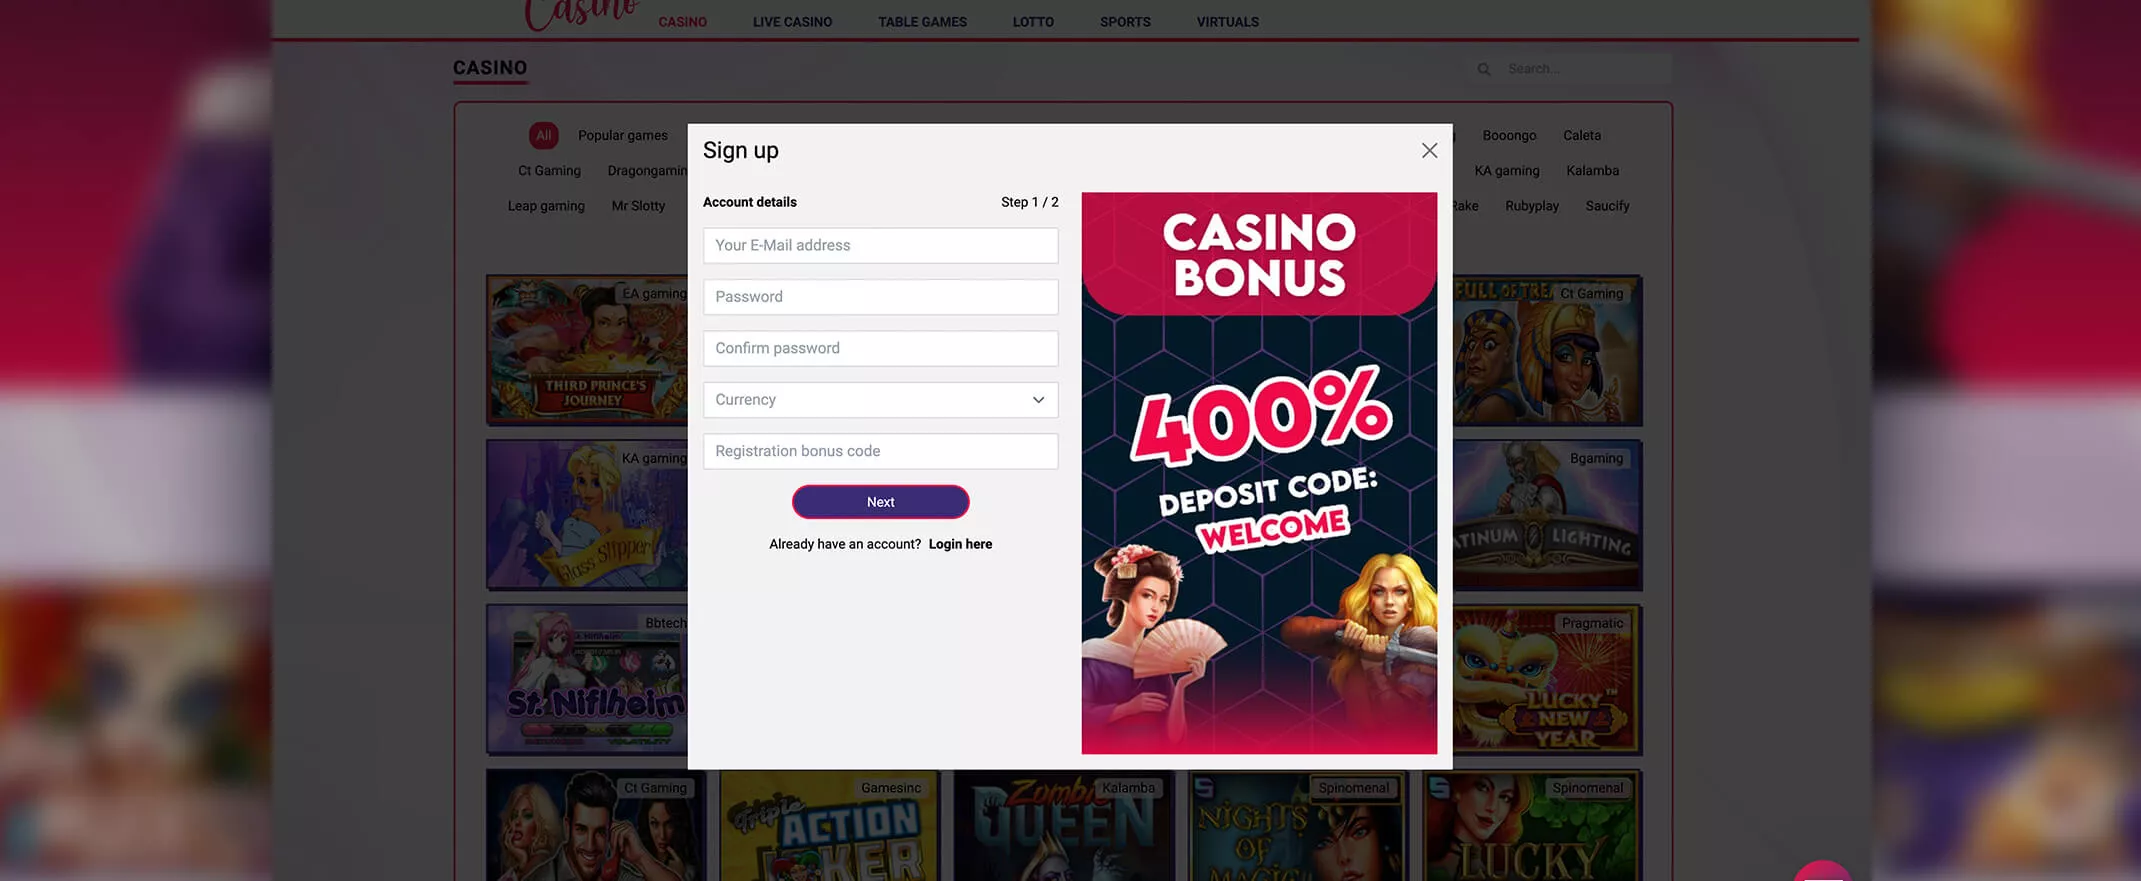 DivasLuck casino screenshot of the registration page